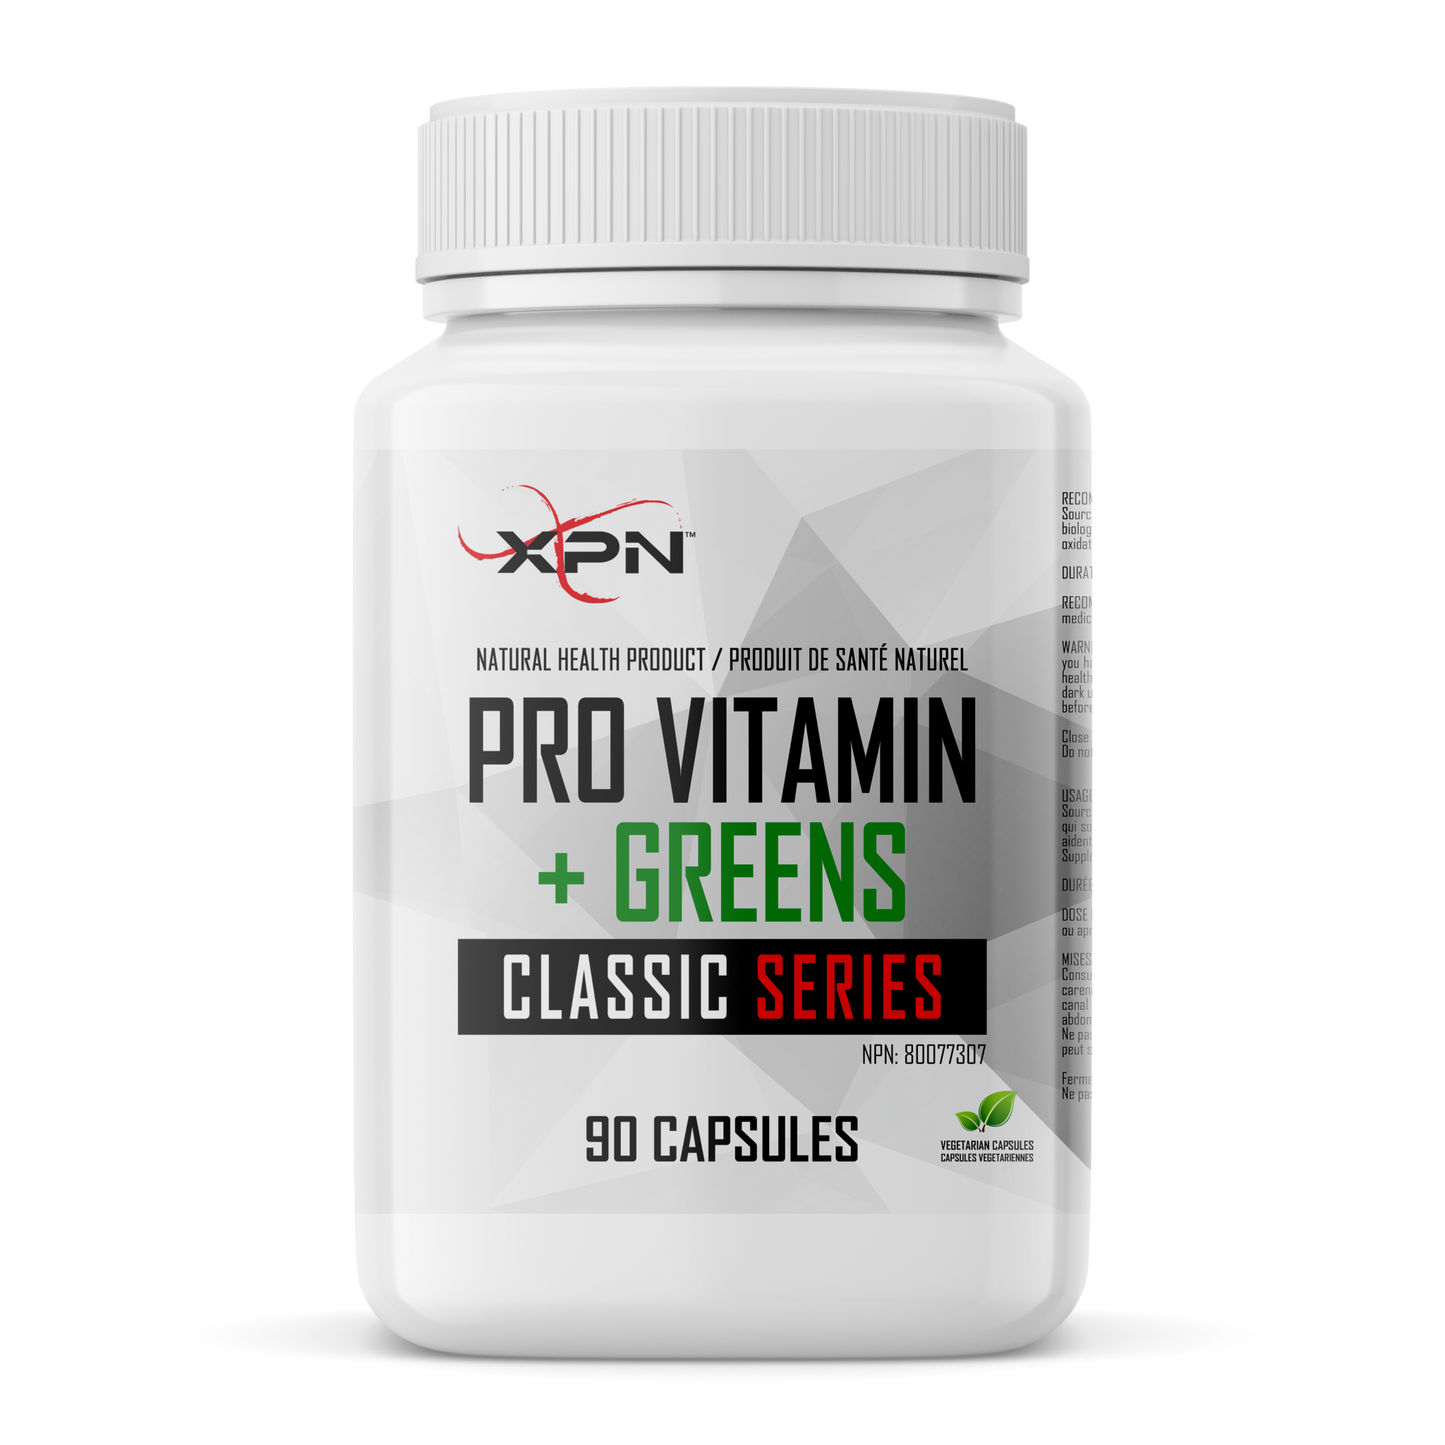 Pro Vitamin + Greens